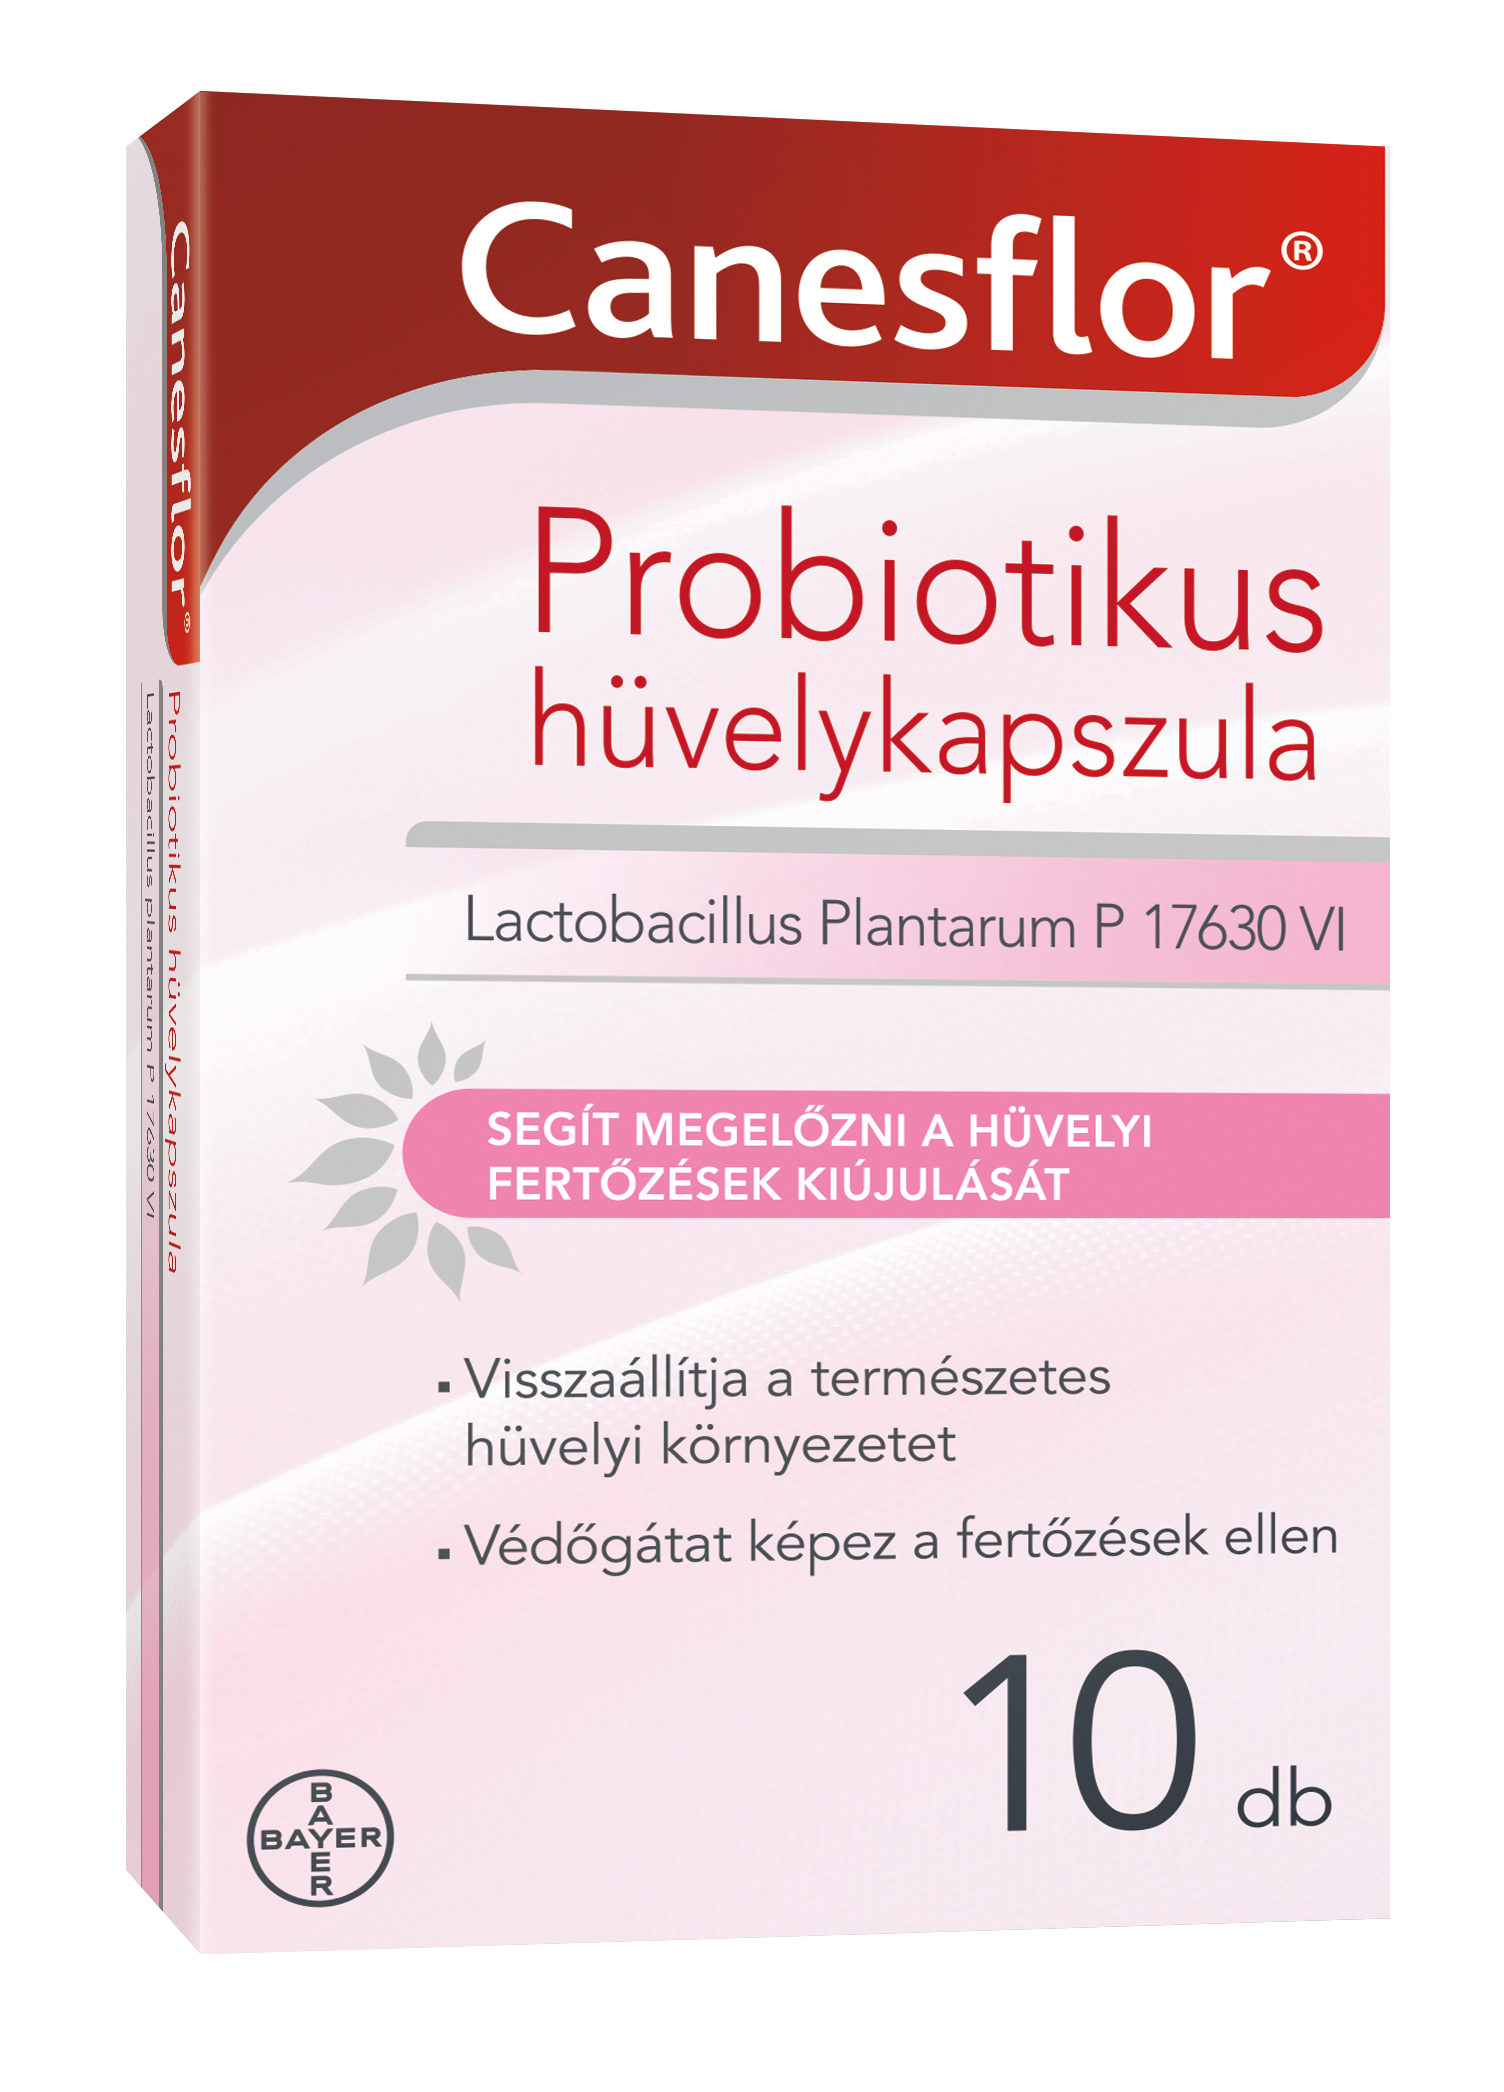 Canesflor probiotikus hüvelykapszula 